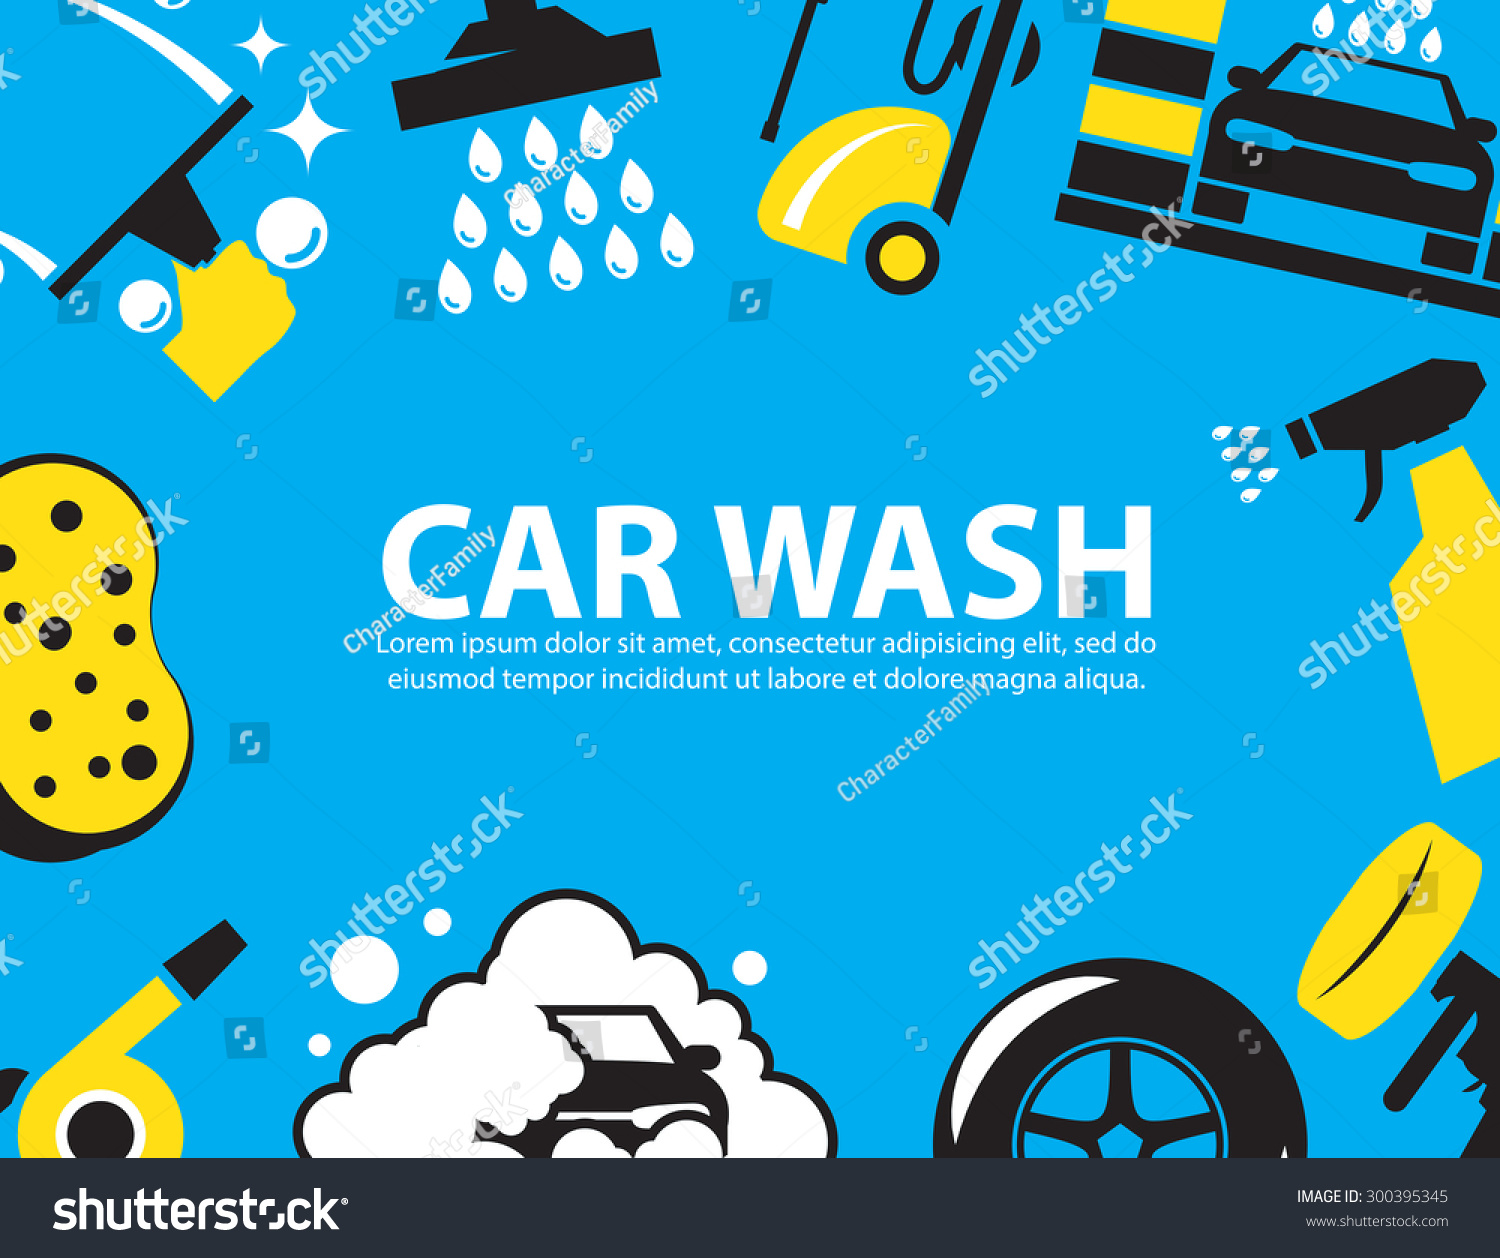 free vector car wash clipart - photo #50